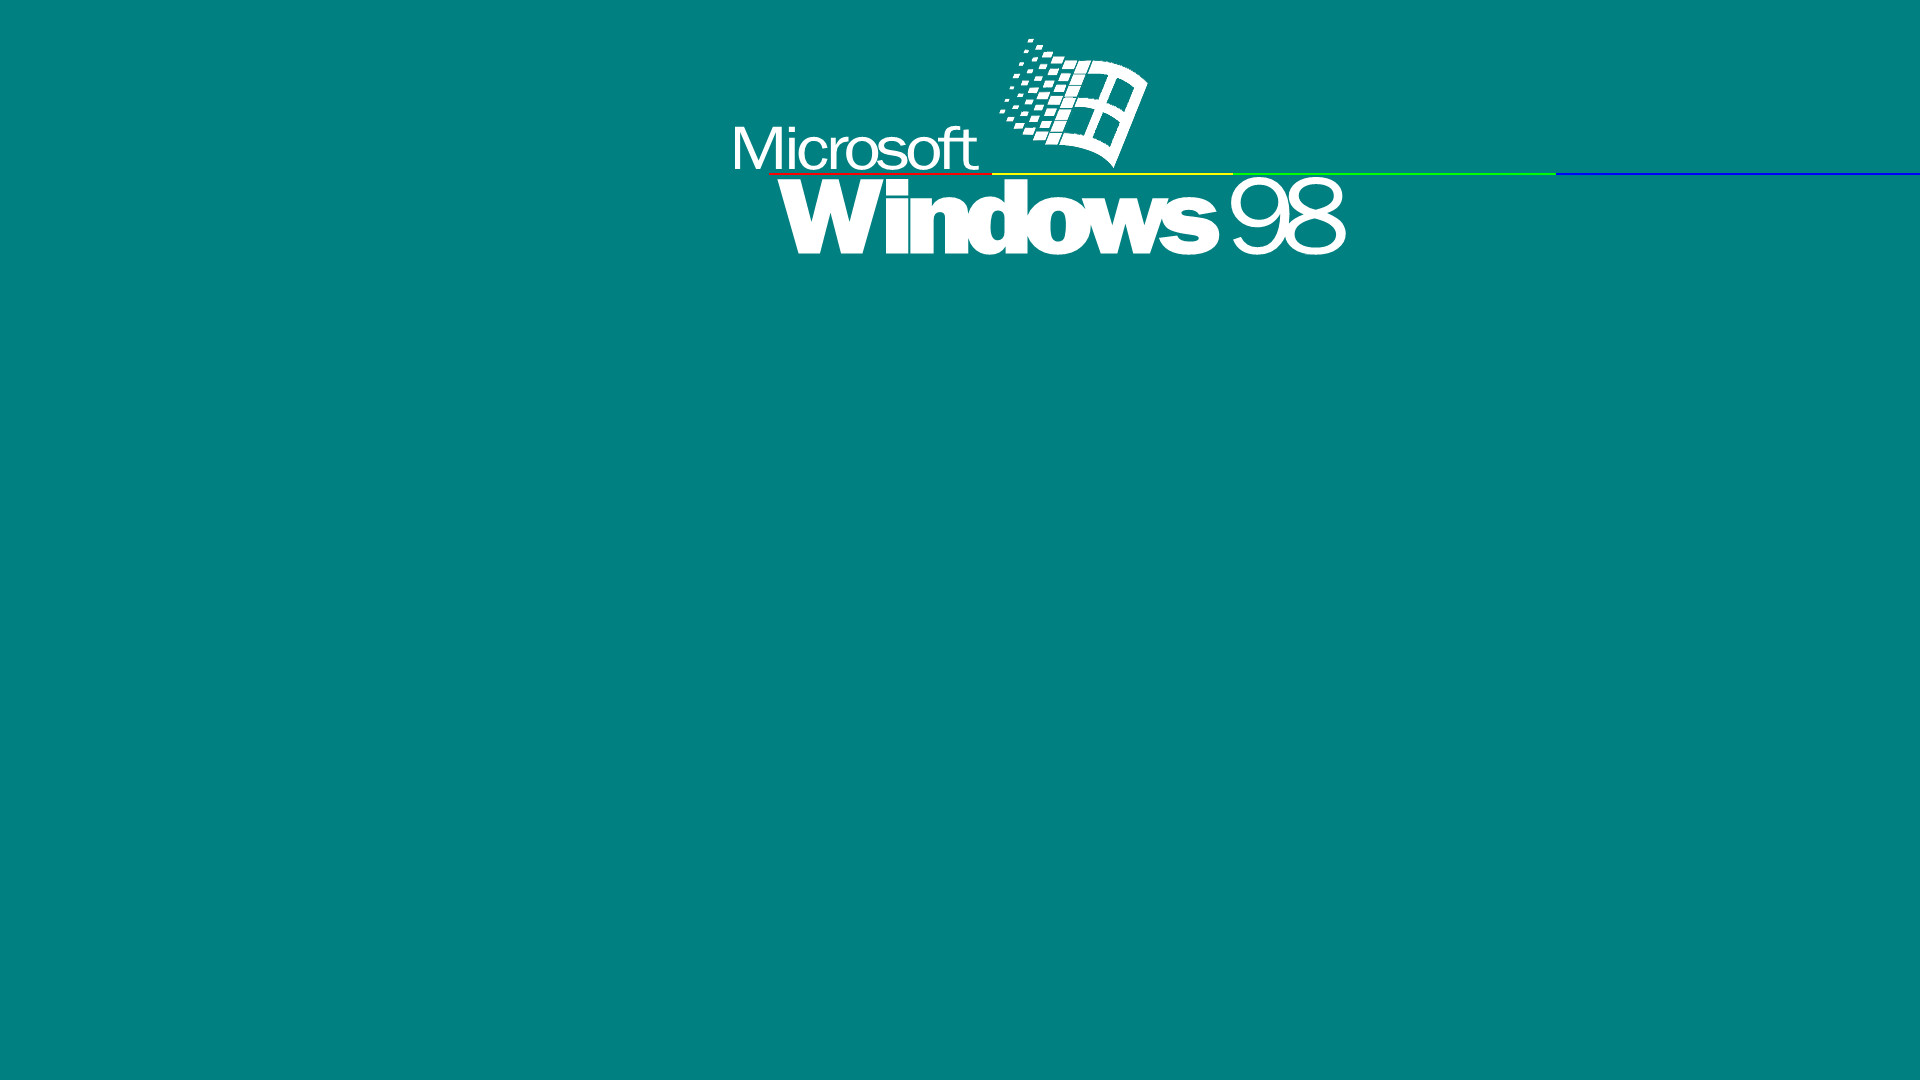 1920x1080 Windows Xp Pipes Screensaver Download : Cool wallpaper dump album on imgur